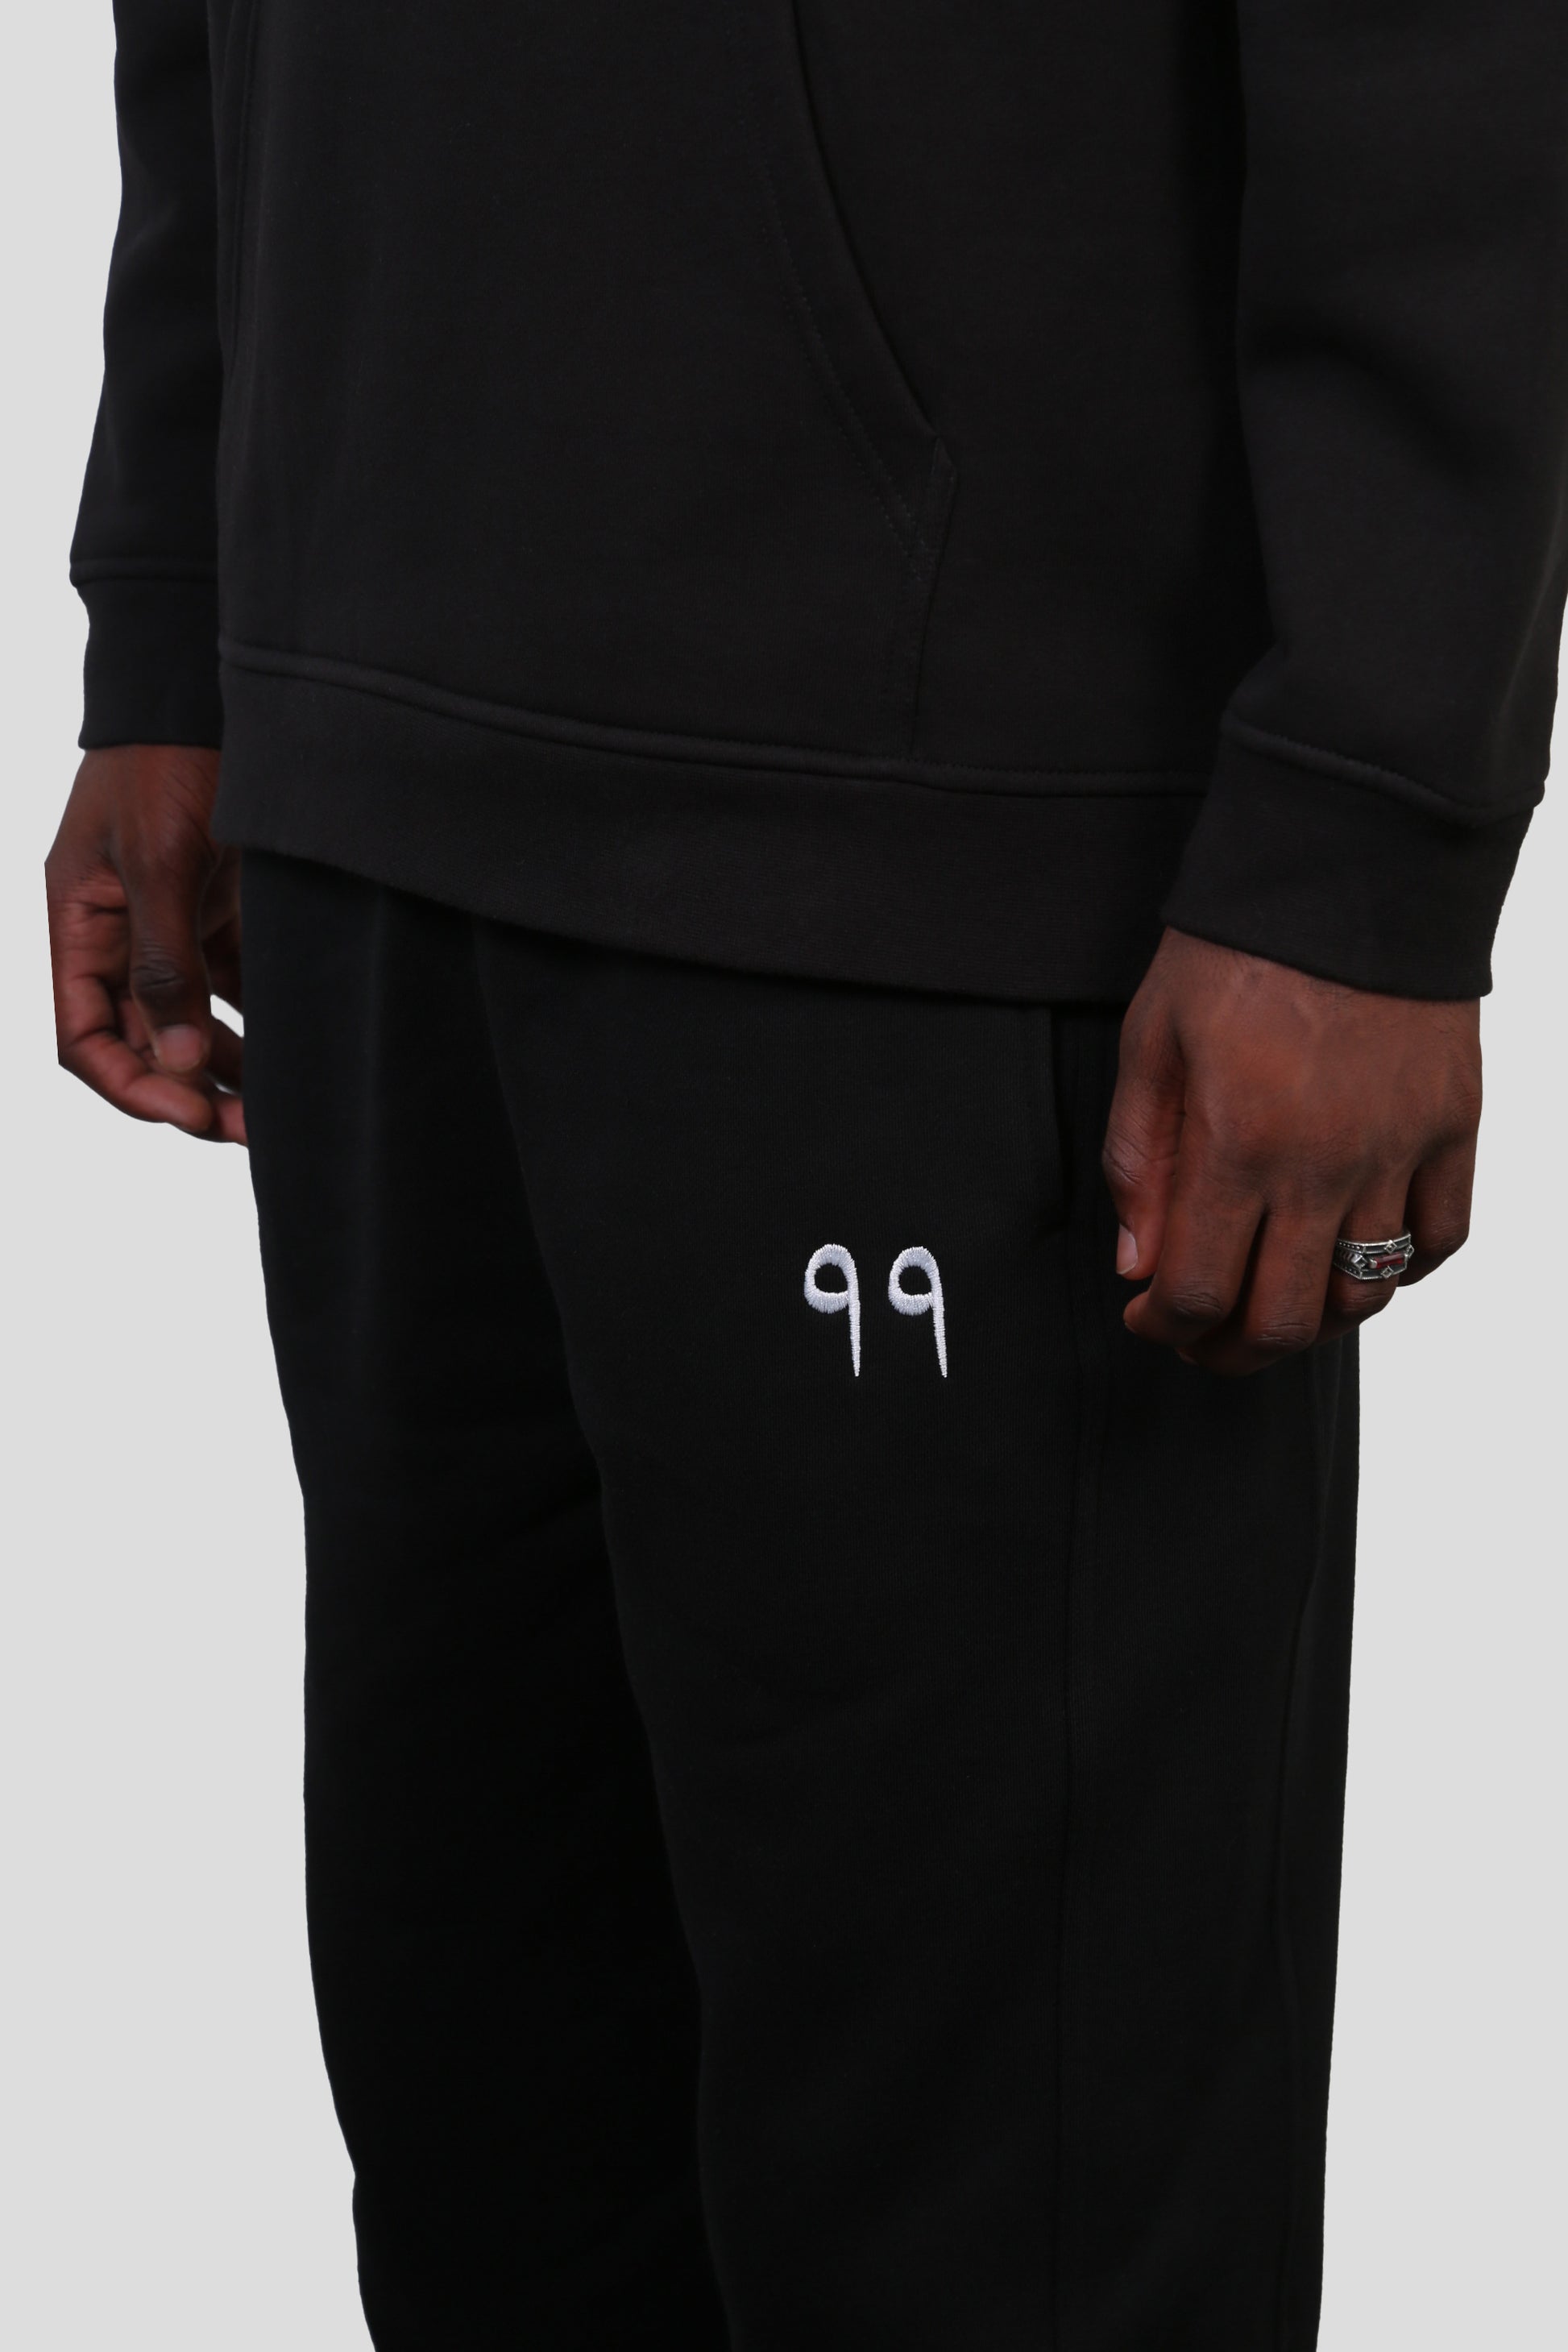 www.ninetyninestudios.de| NINETYNINE JOGGER BLACK| Jogginghose | €49.99 | Revolutionary Islamic Streetwear | 99Studios